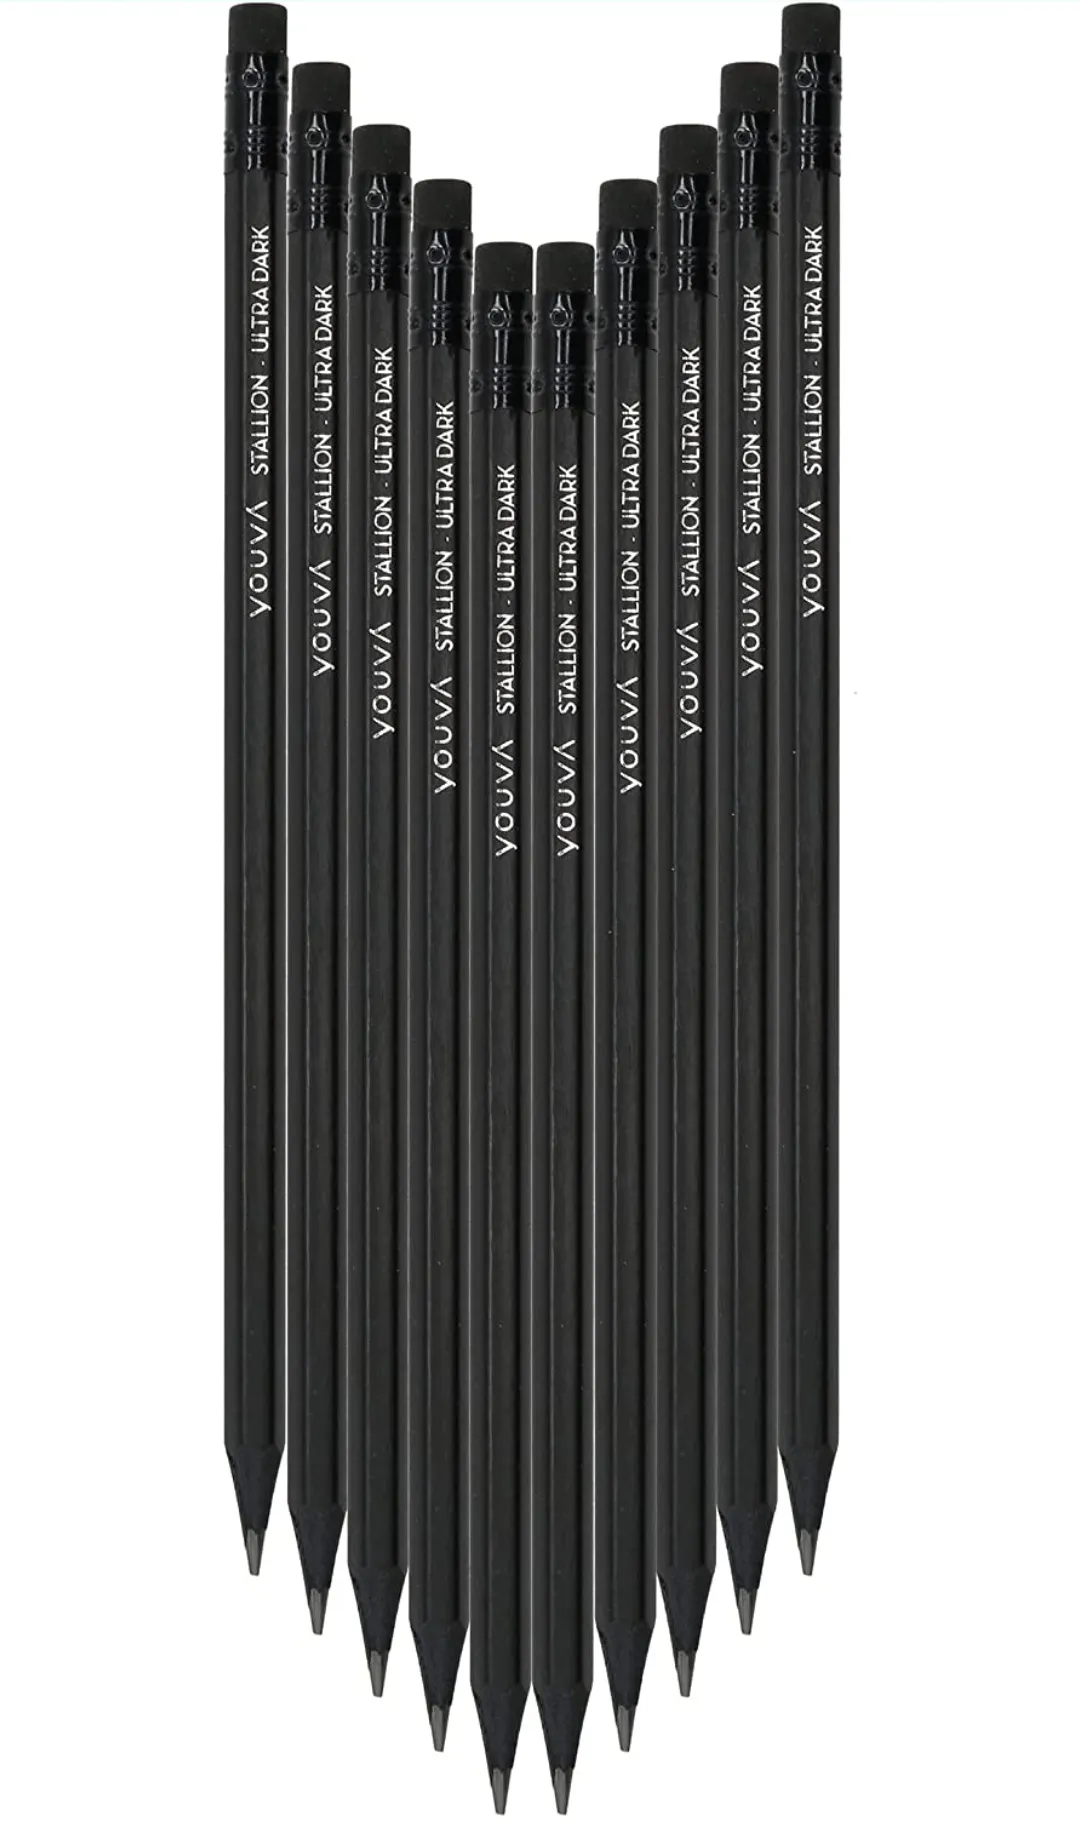 Navneet Youva Stallion Pencil Super Black Lead (1 Pack of 10 Pencils)